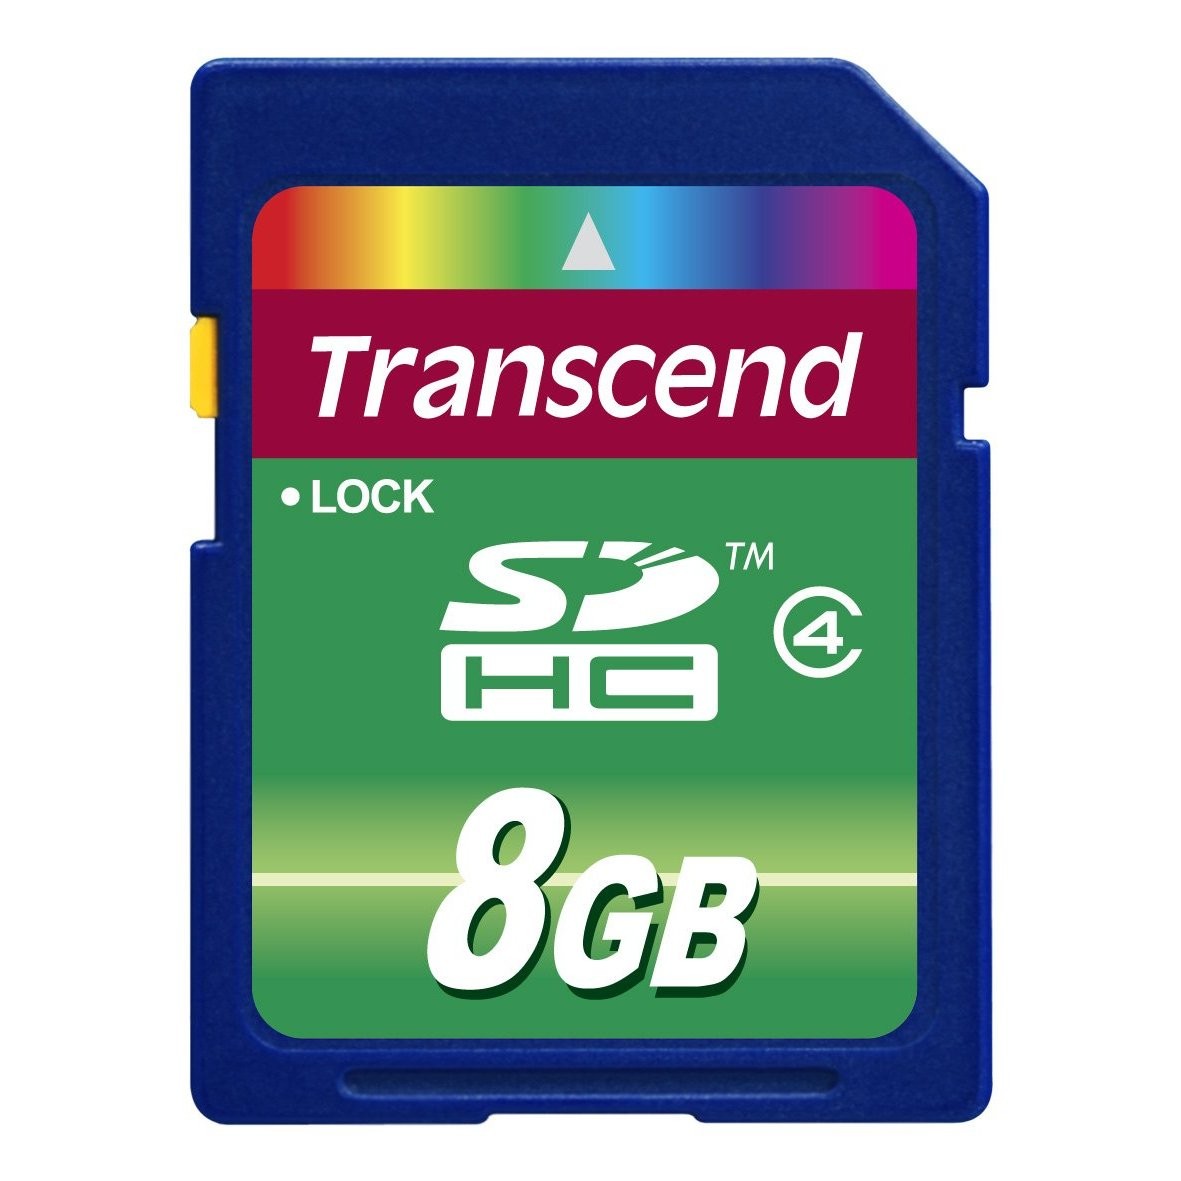 8GB (SDHC) Secure Digital High Capacity Class 4 Flash Card